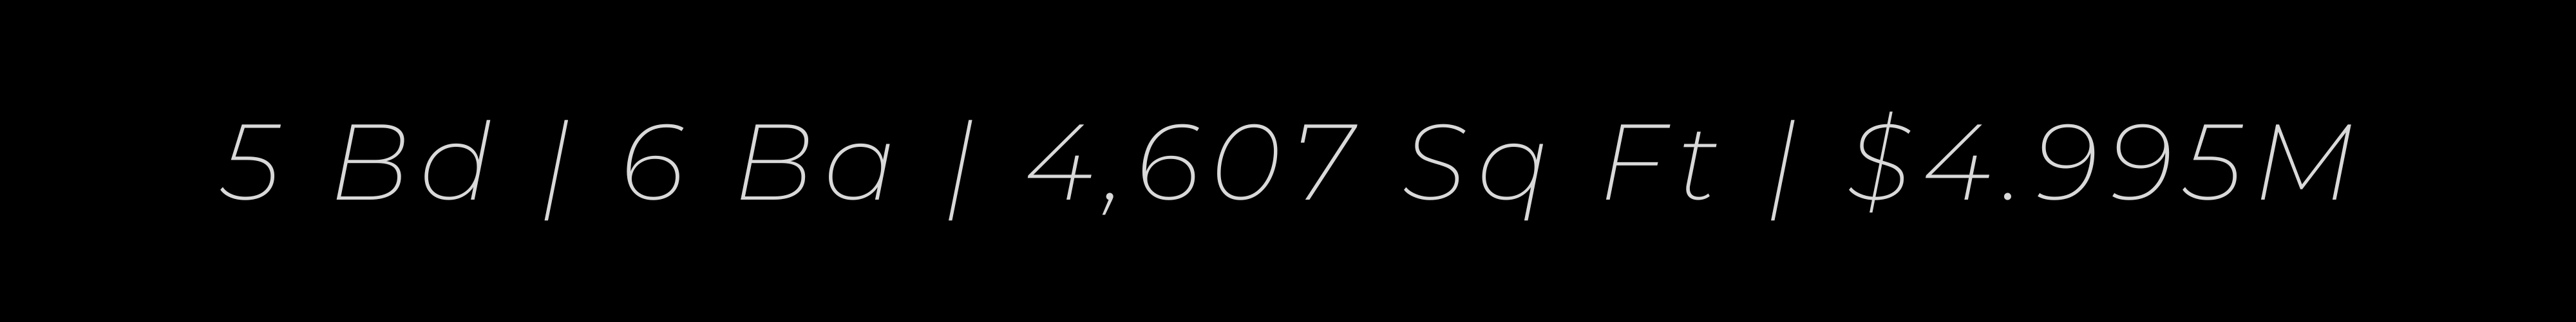 2305 Westover Numbers (1).png